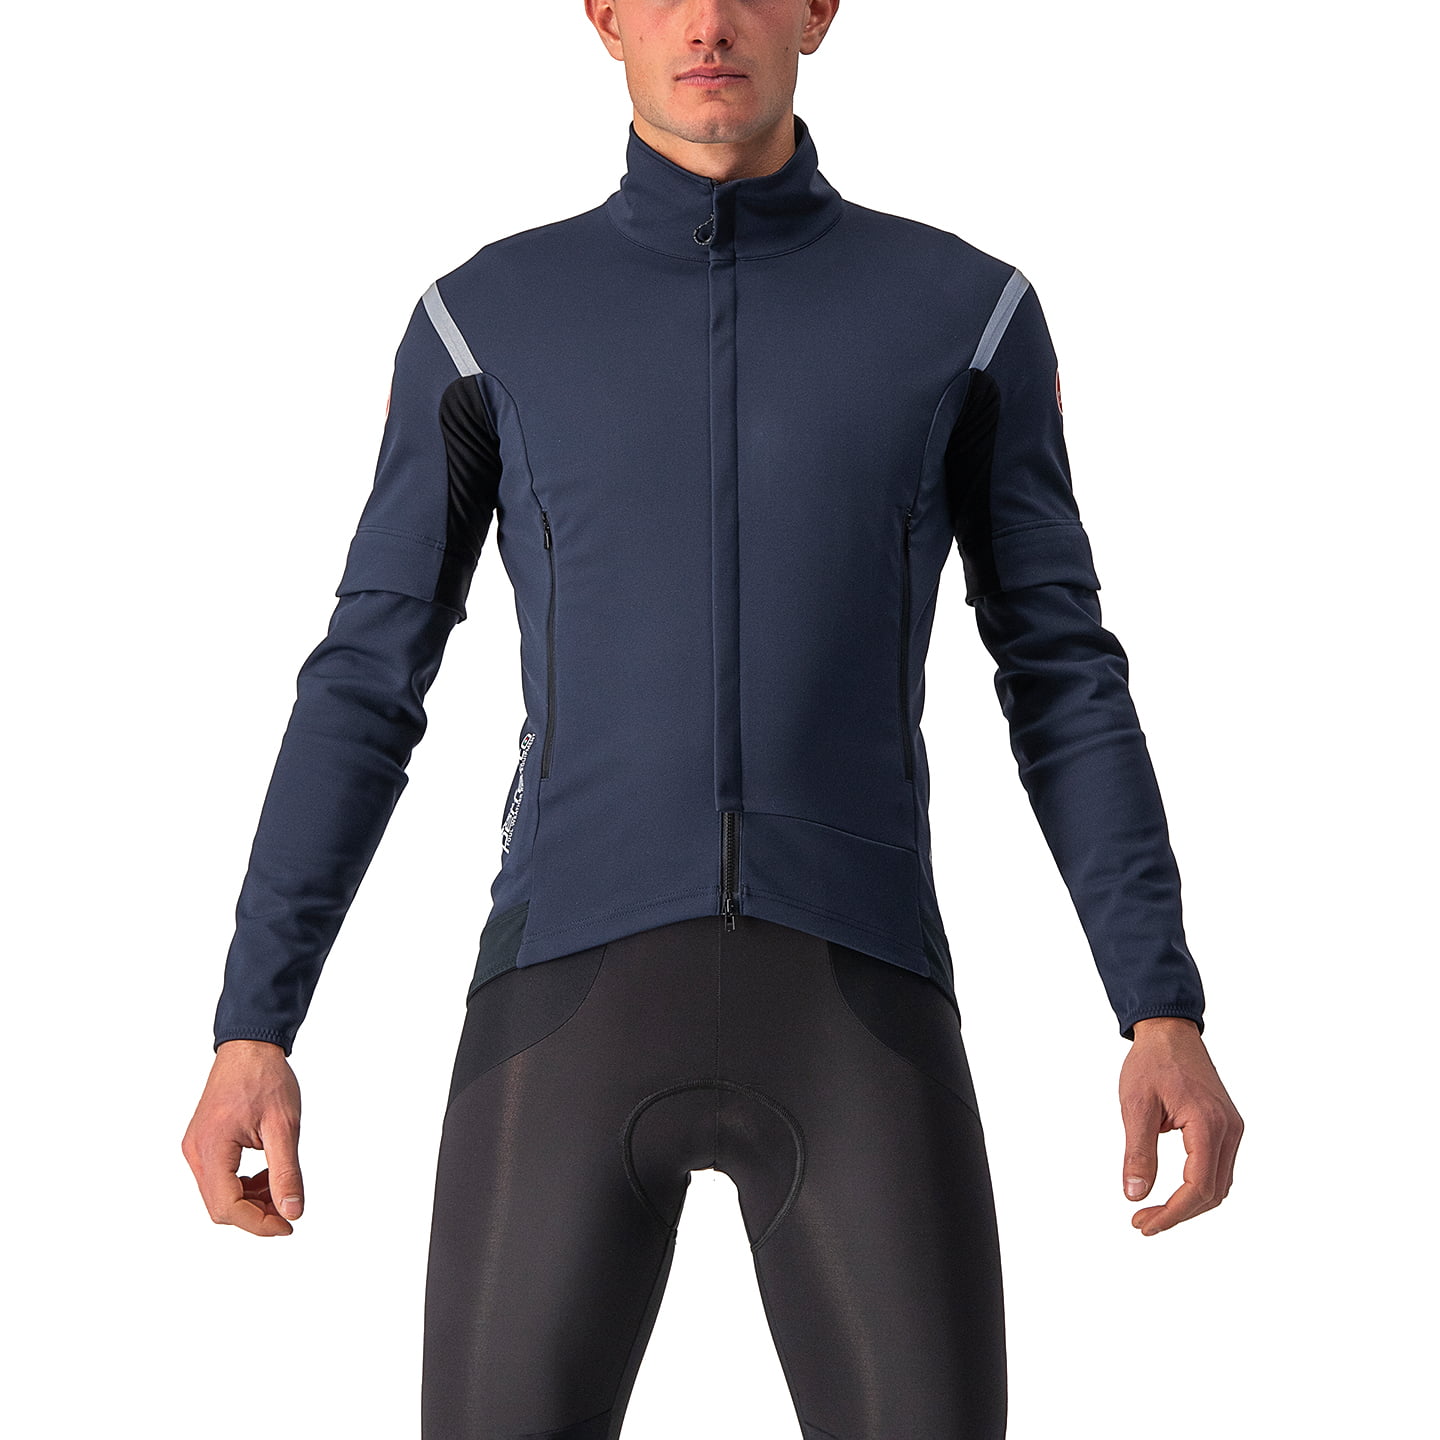 CASTELLI Perfetto RoS 2 Convertible Light Jacket Light Jacket, for men, size L, Cycle jacket, Cycle clothing